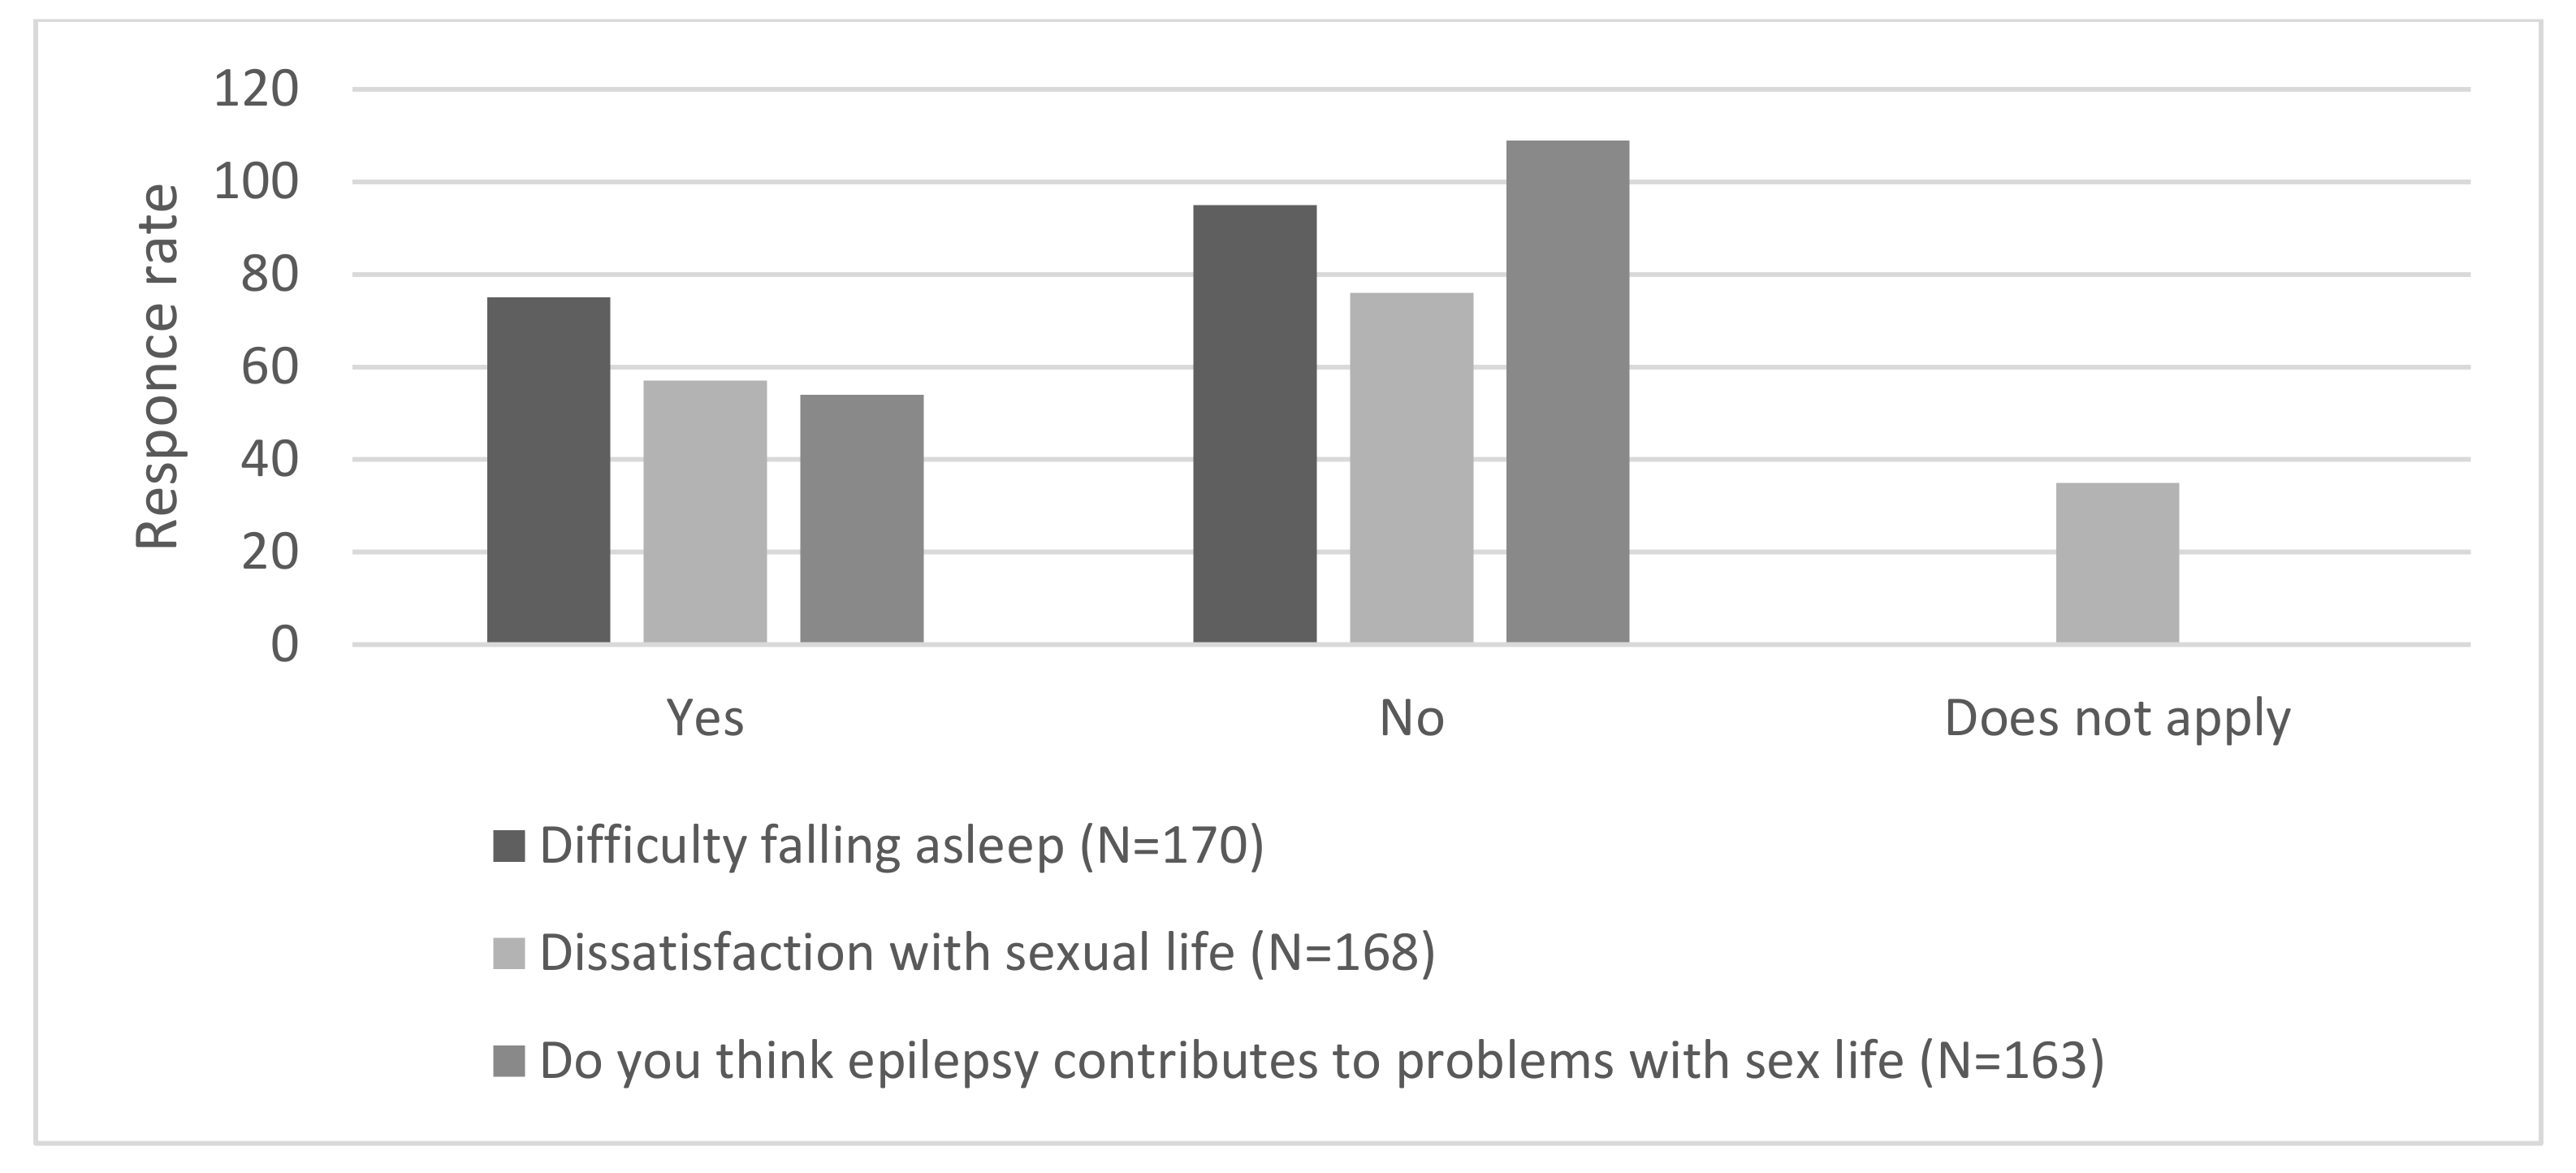 epilepsy problems